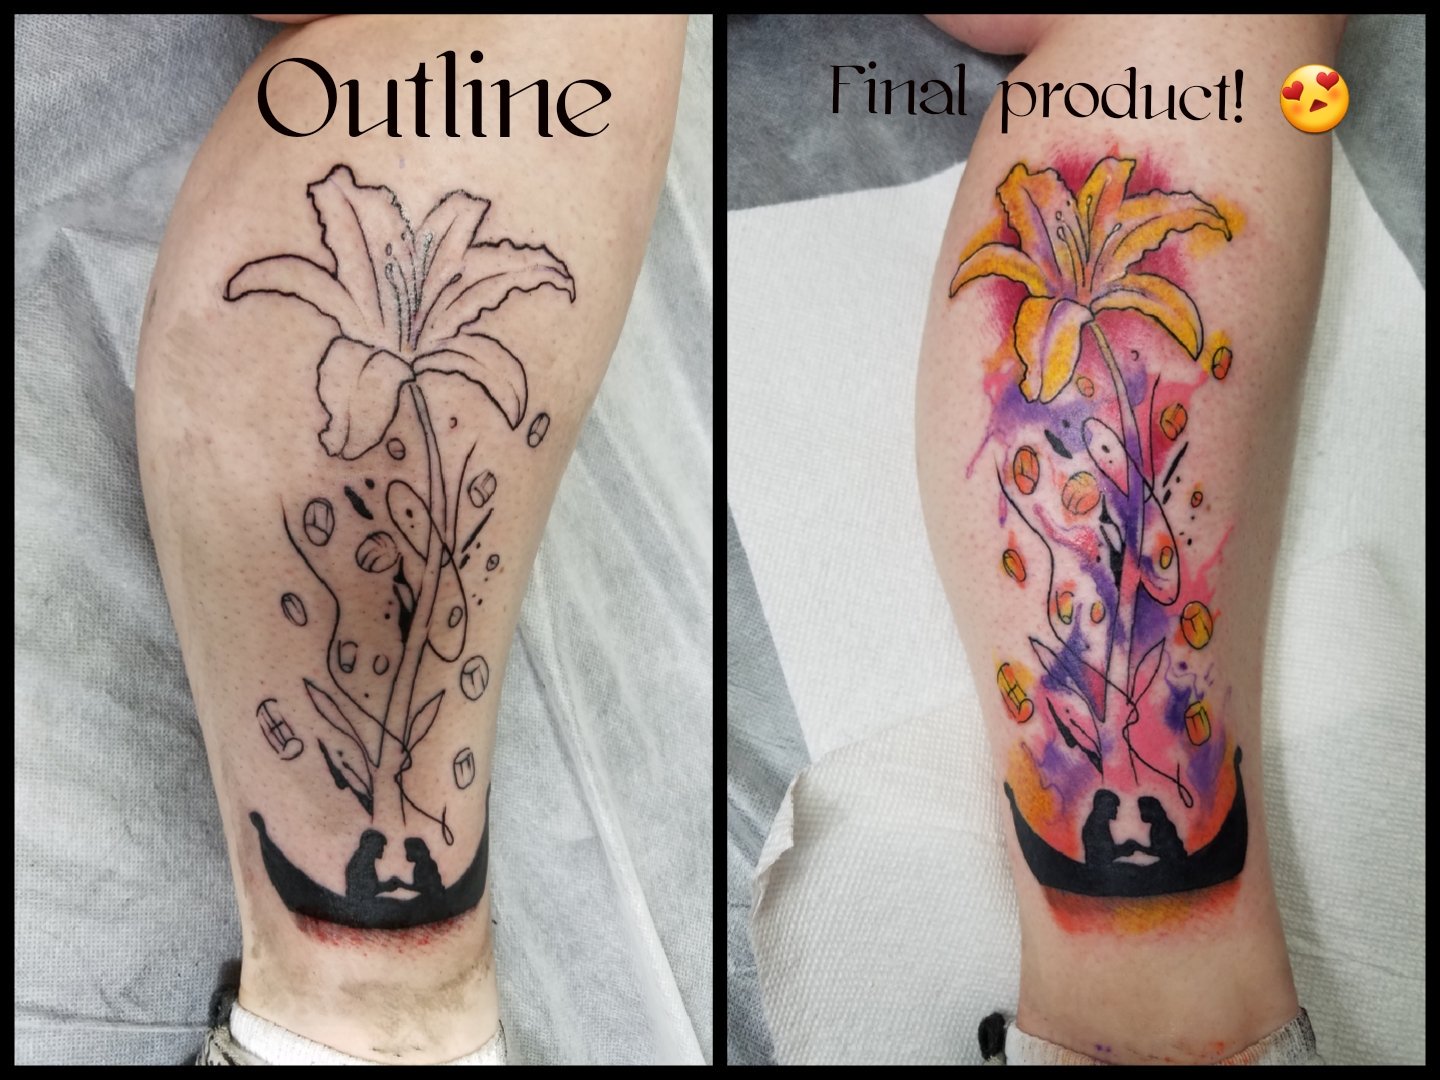 The dream works logo but with Freddie Mercury instead  Tangled tattoo  Small tattoos Tiny disney tattoo